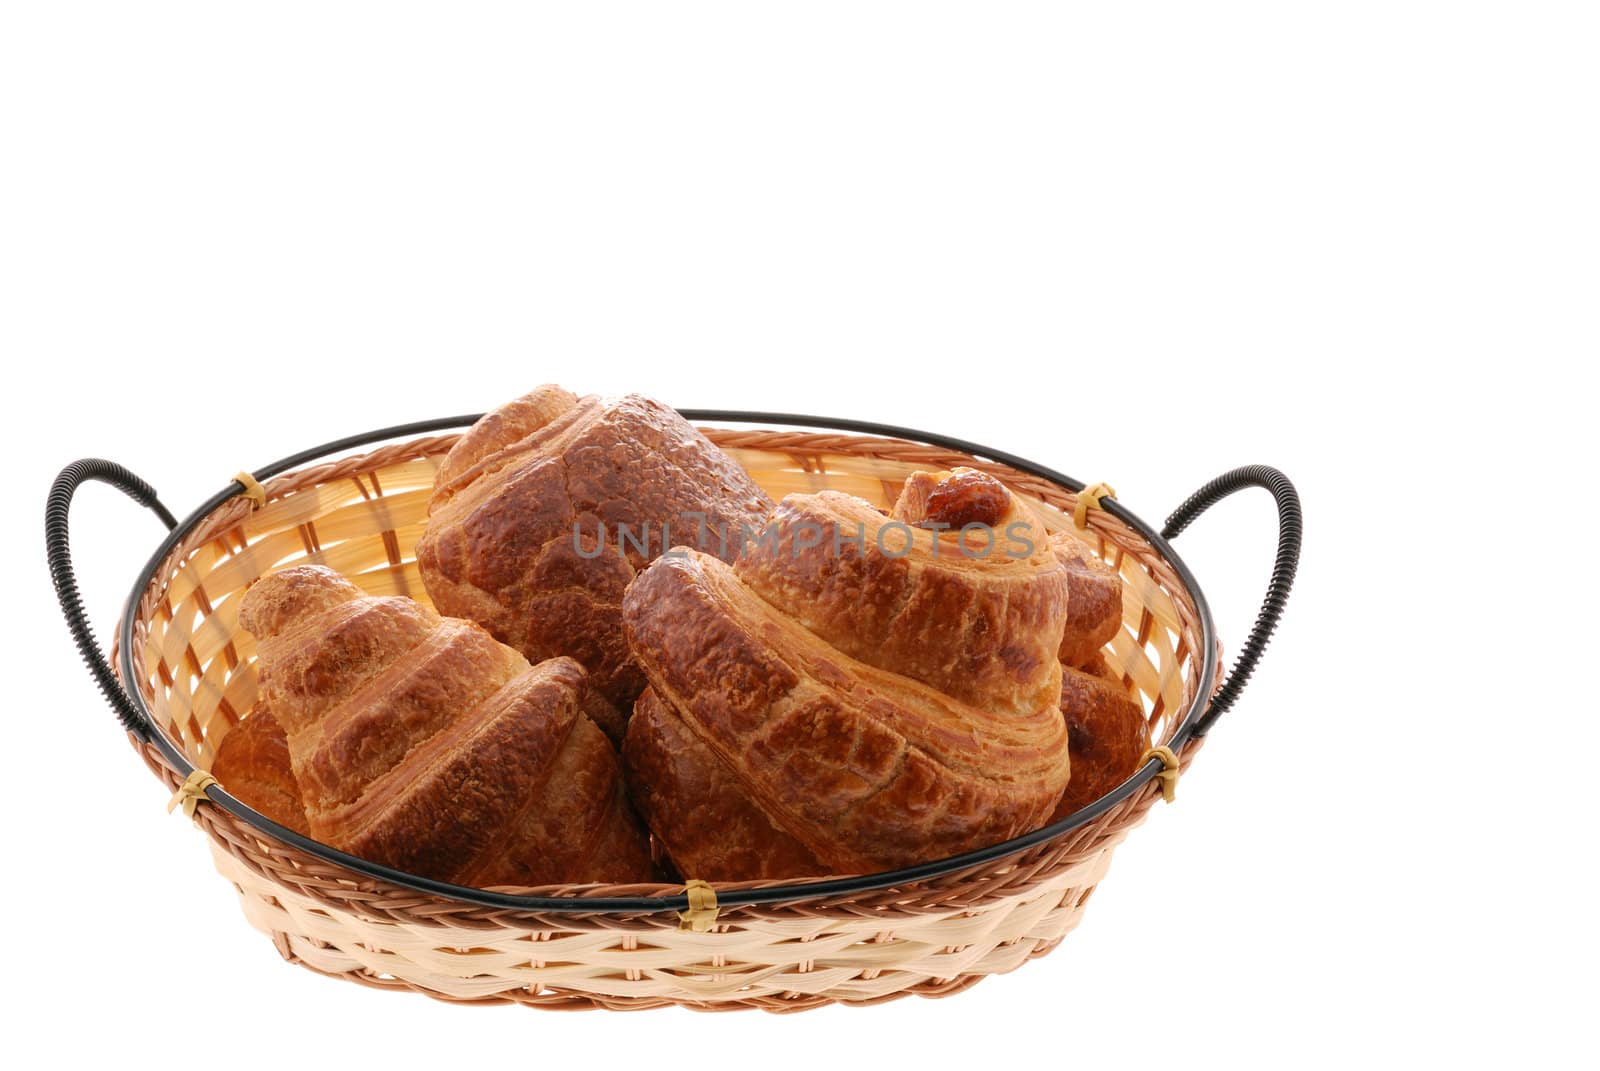 Croissant in basket by galdzer